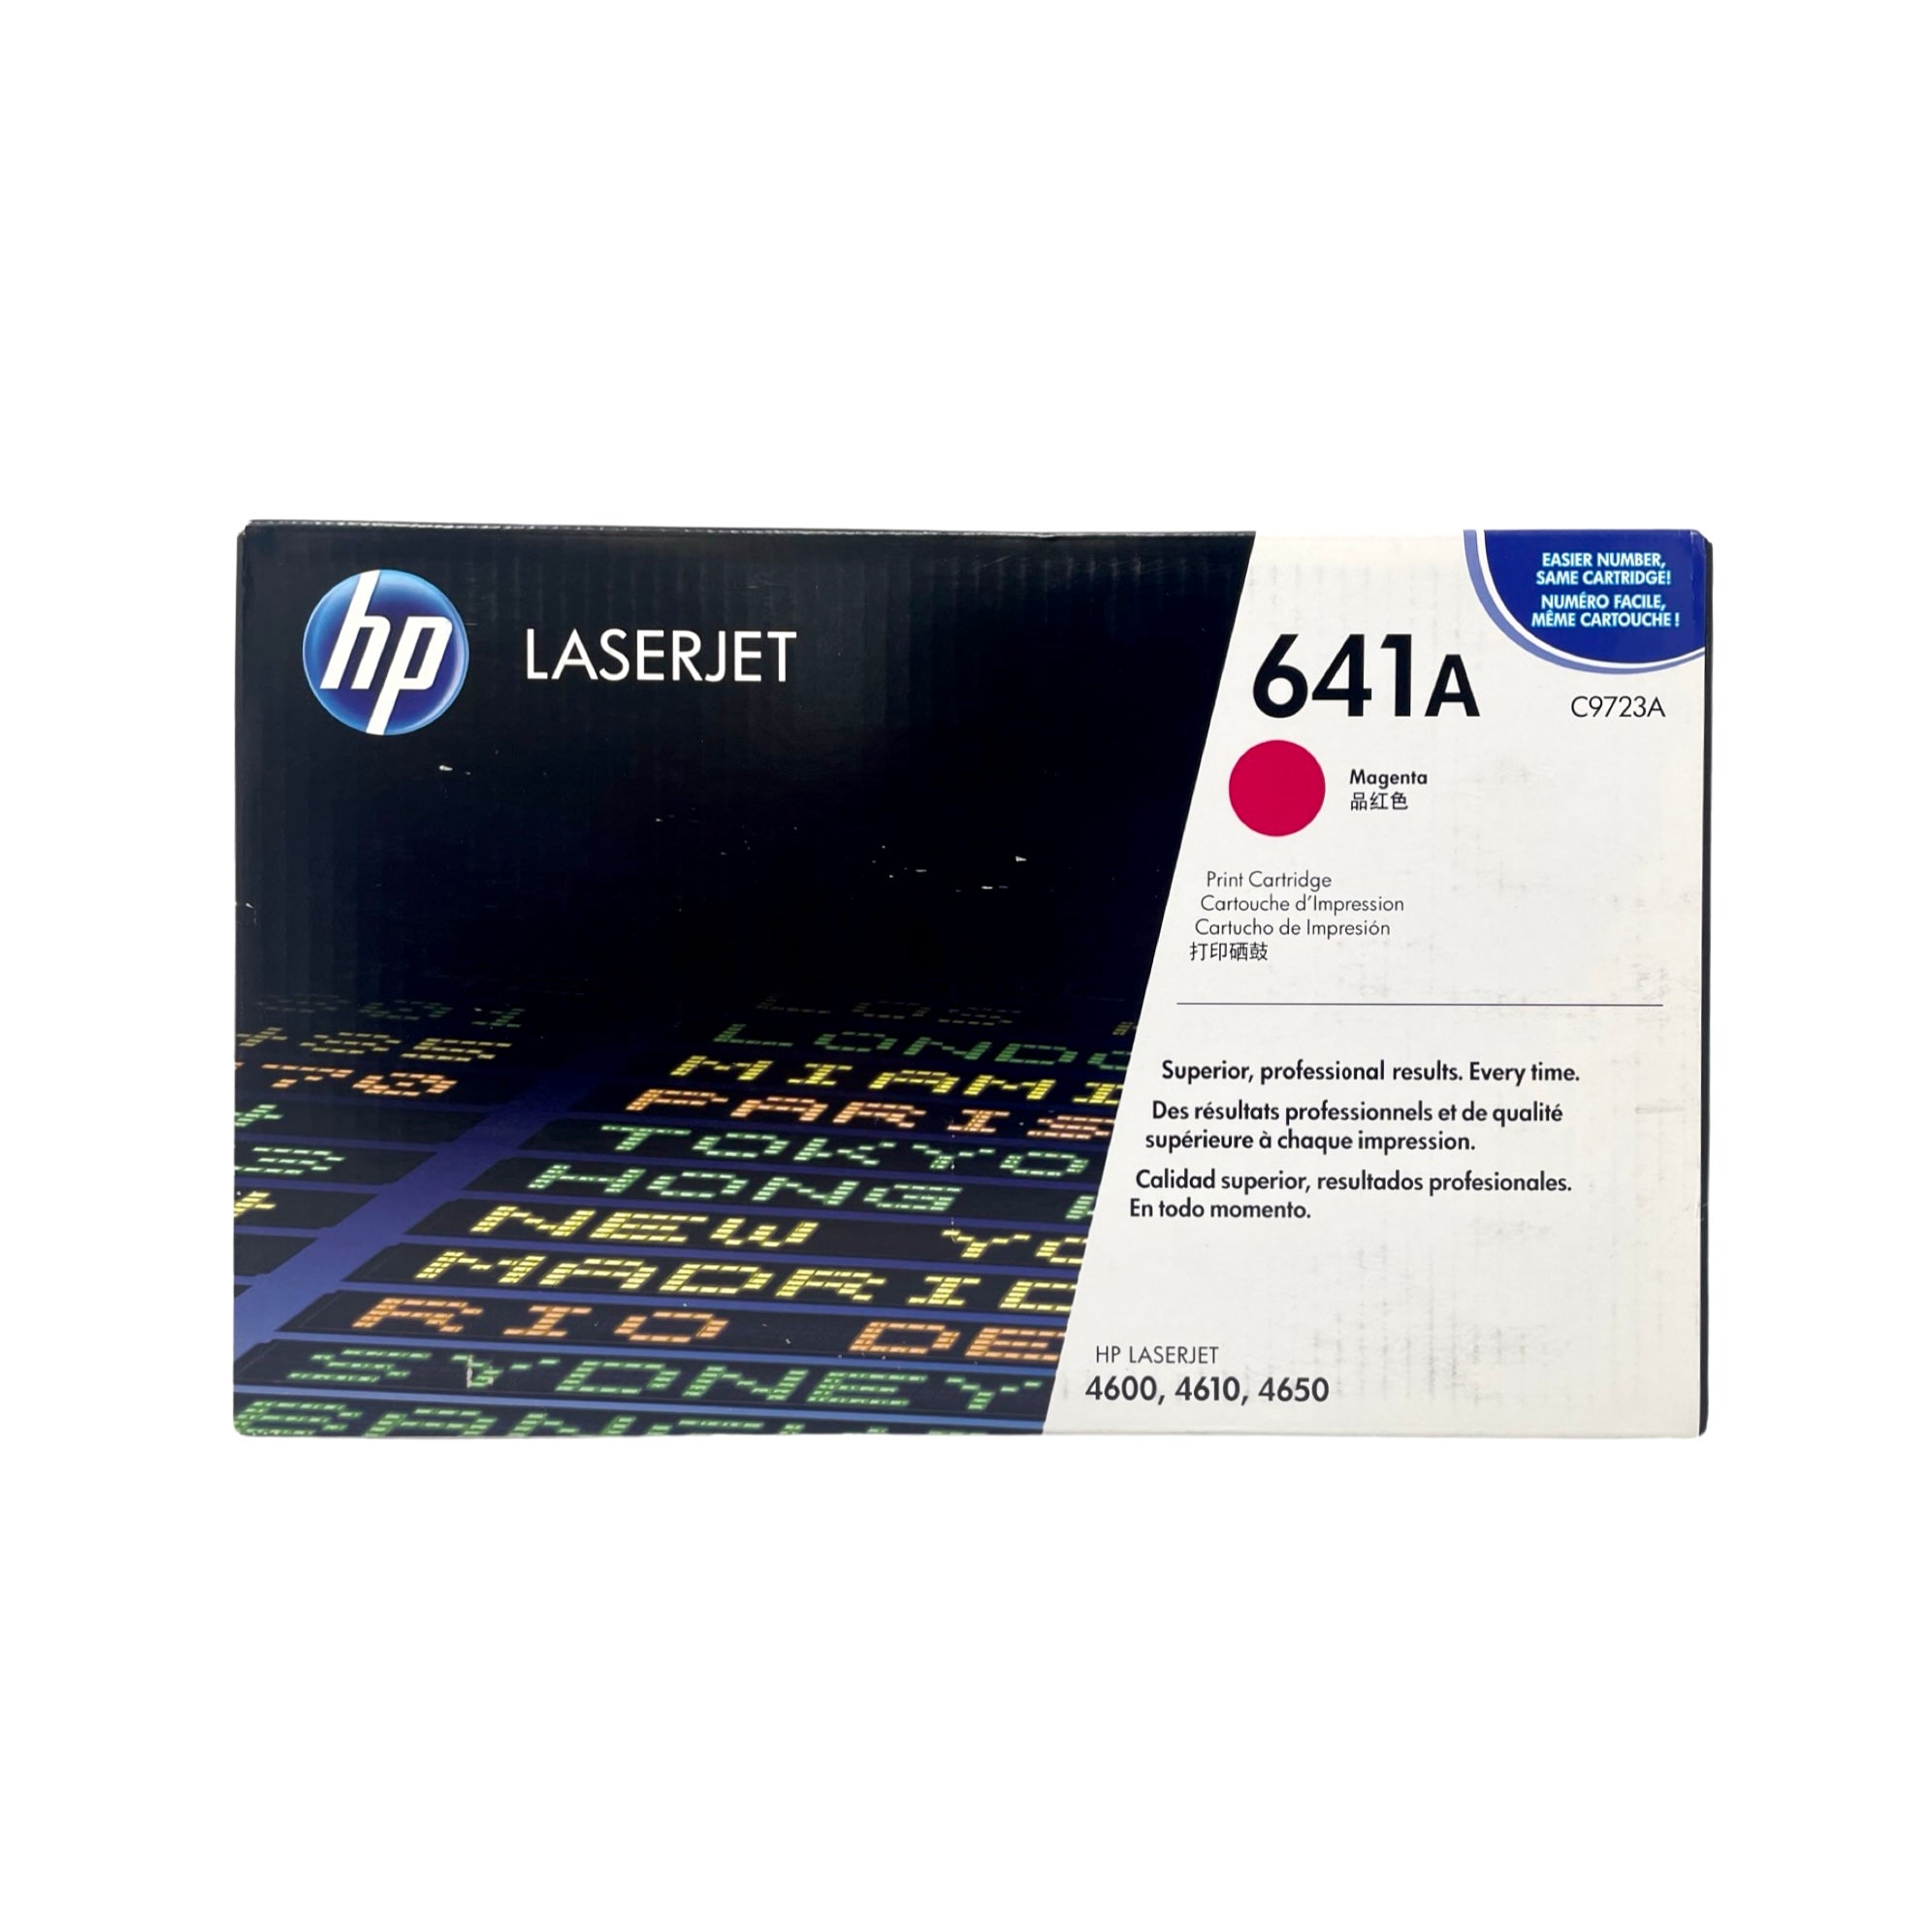 Genuine HP 641A Magenta C9723A LaserJet Toner Cartridge